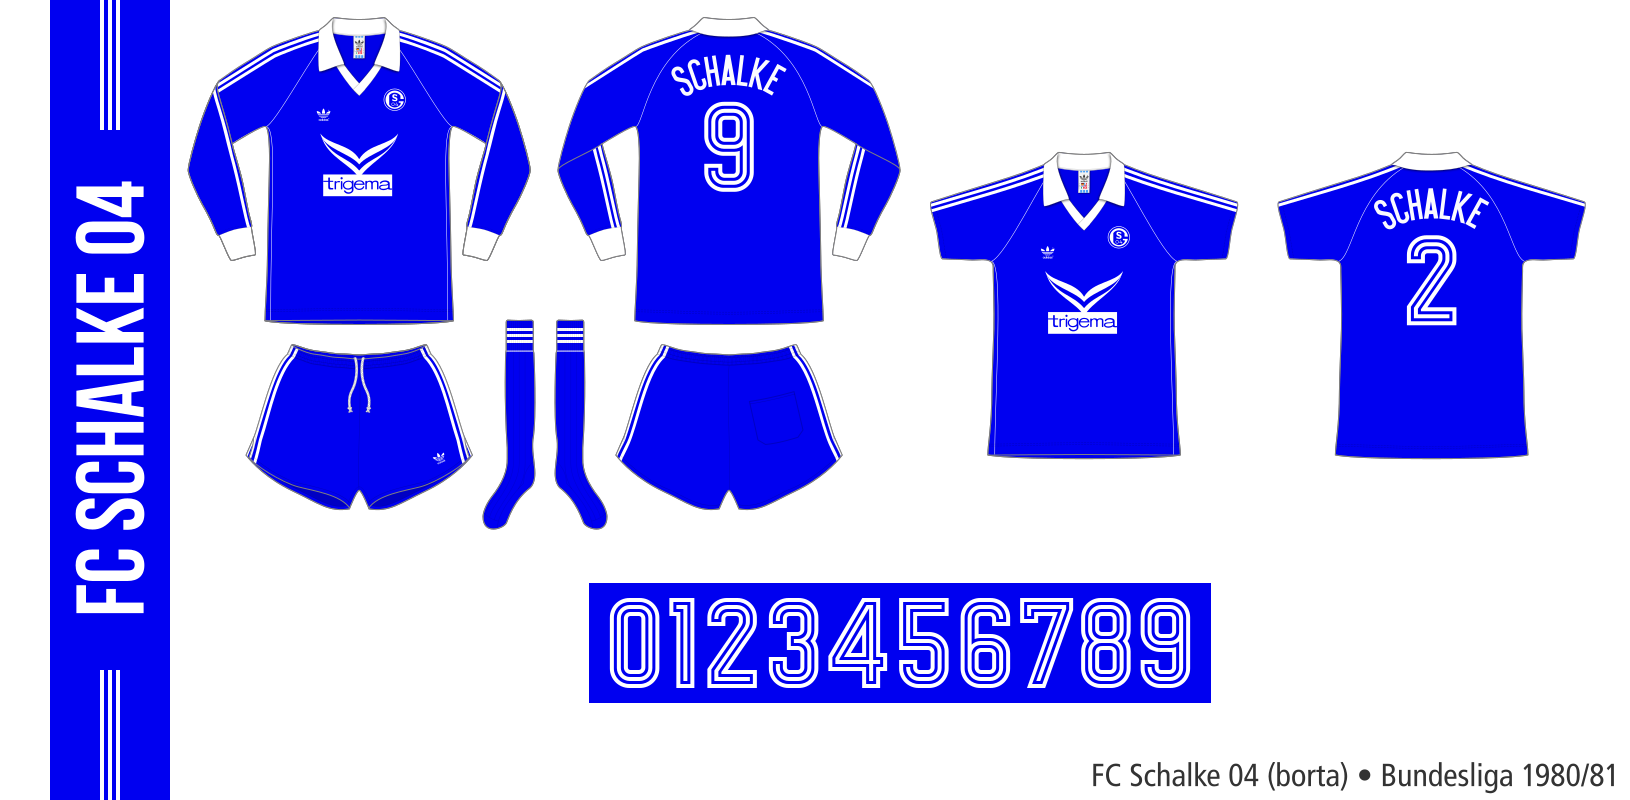 Schalke 04 1980/81 (borta)